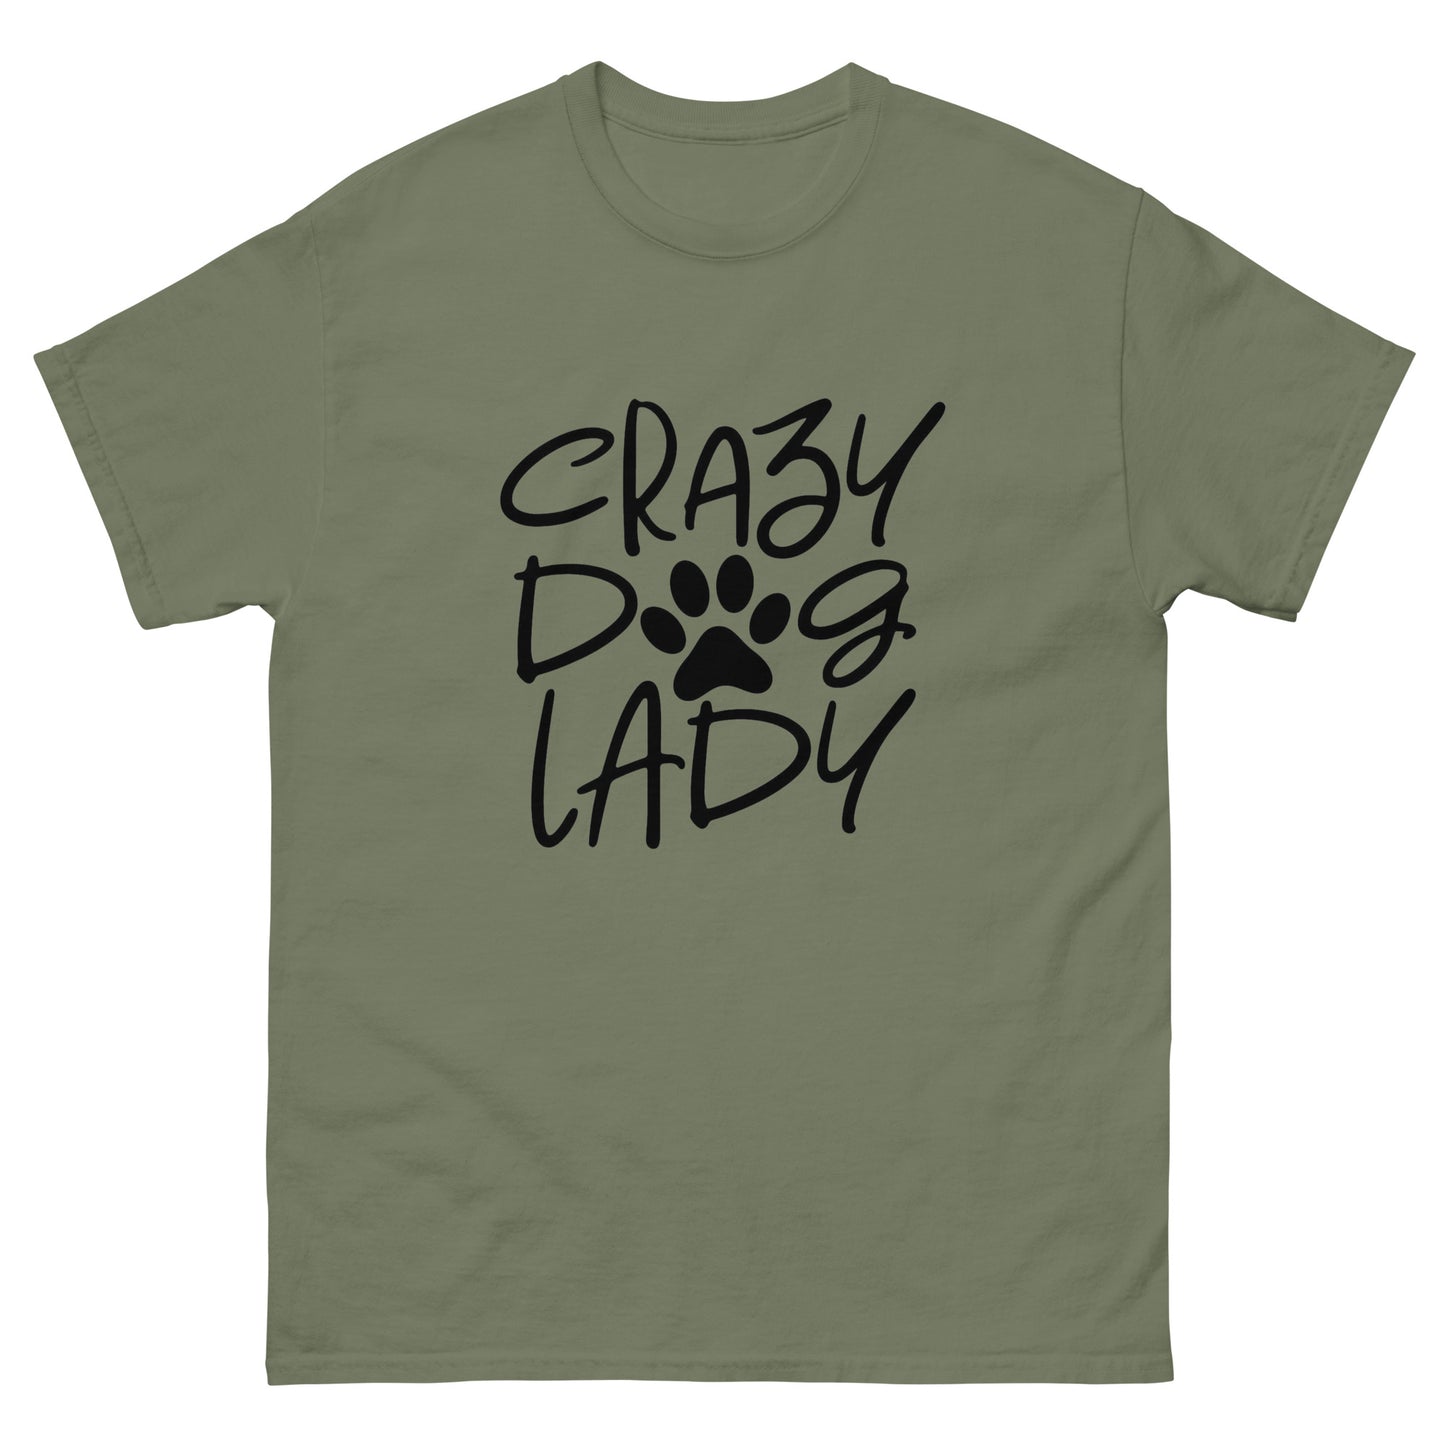 Crazy Dog Lady - classic tee